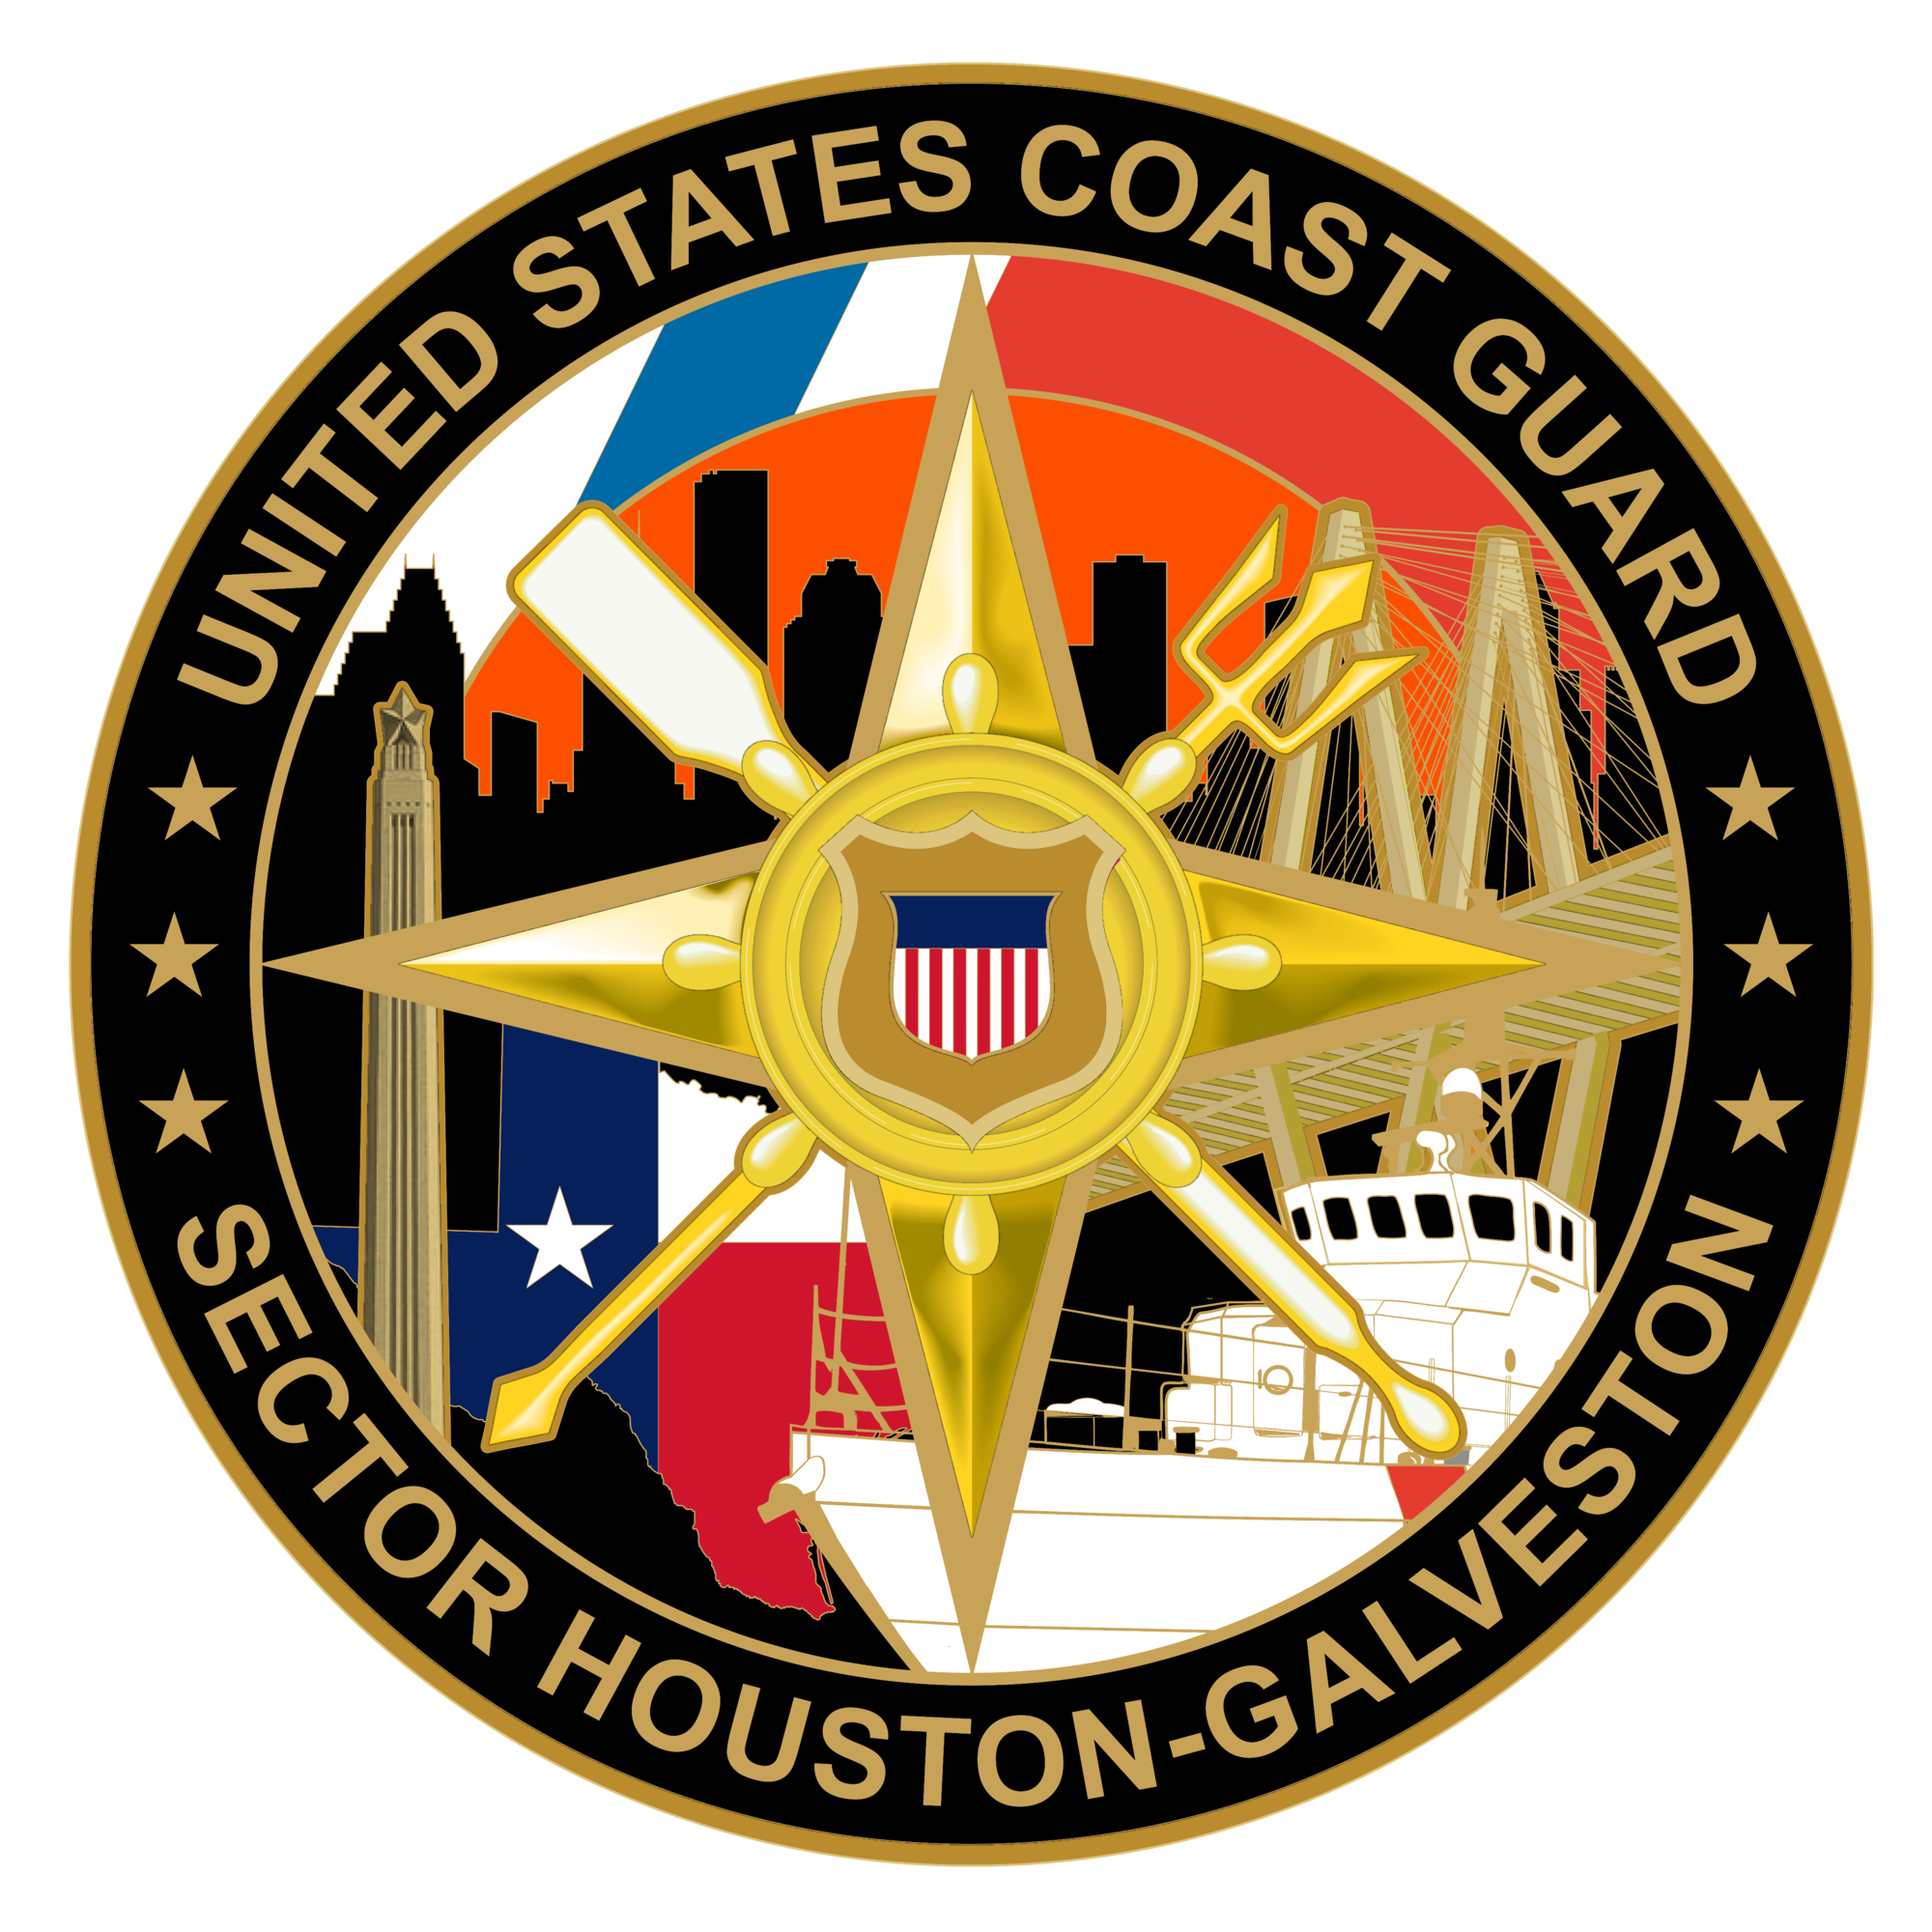 Sector Houston-Galveston Logo